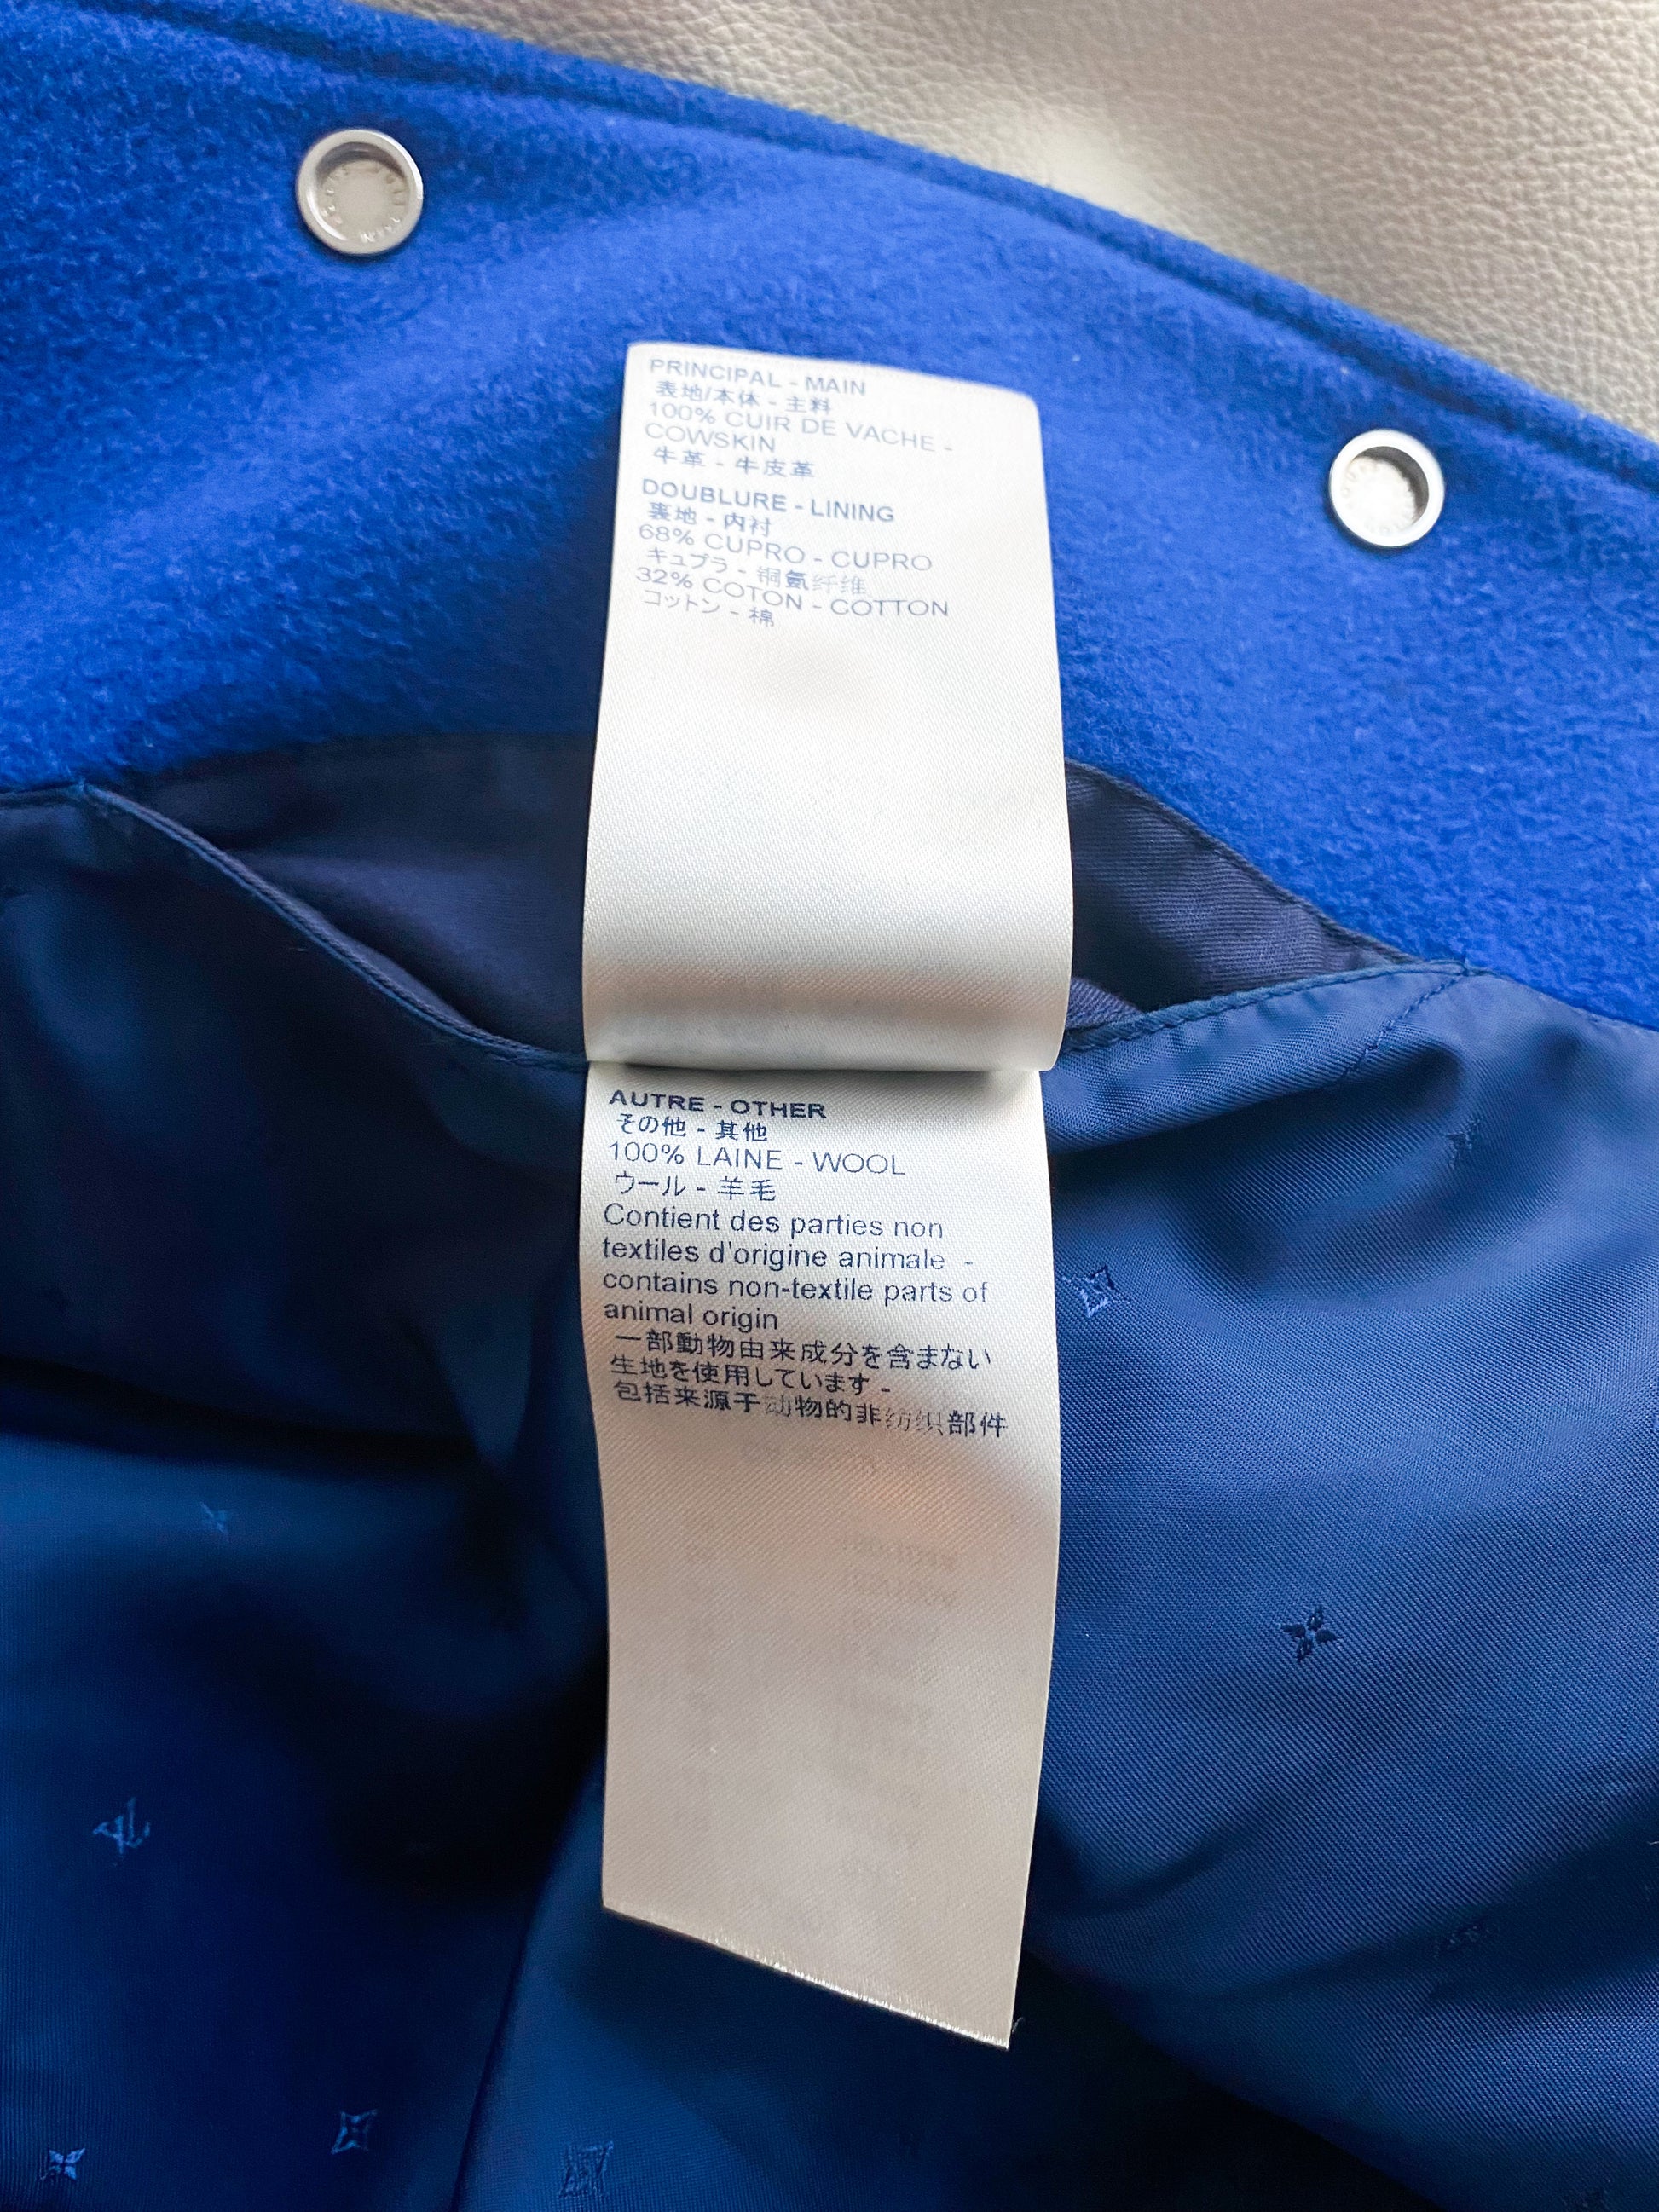 Louis Vuitton 2019 Wizard of Oz Varsity Jacket - Blue Outerwear